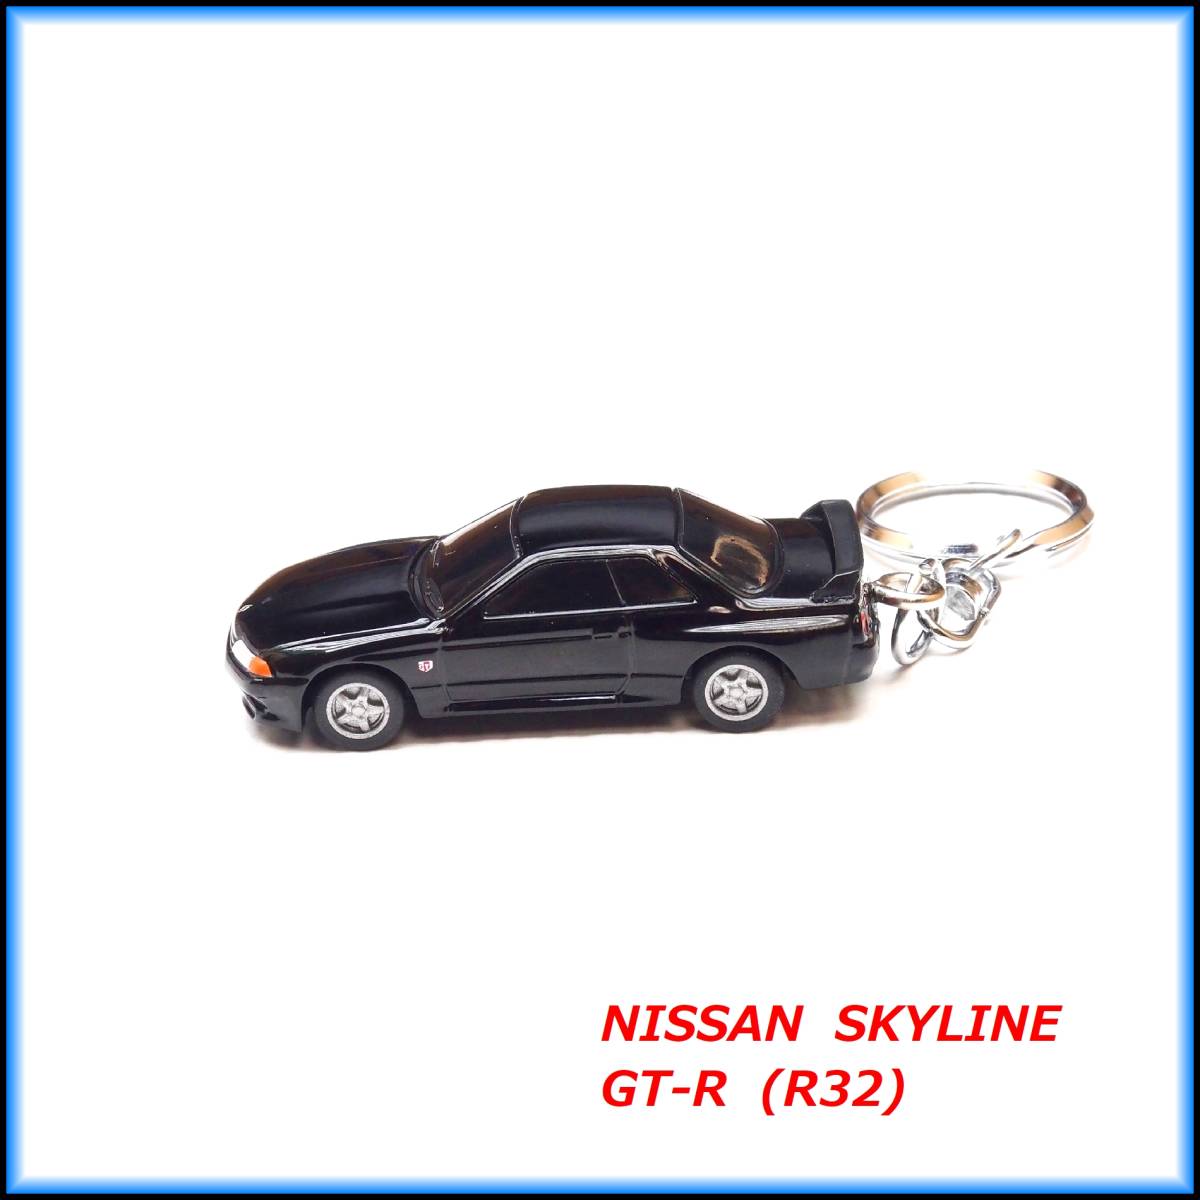  Nissan Skyline GT-R R32 миникар ремешок брелок для ключа обвес колесо muffler BBS карбоновый спойлер бампер руль 